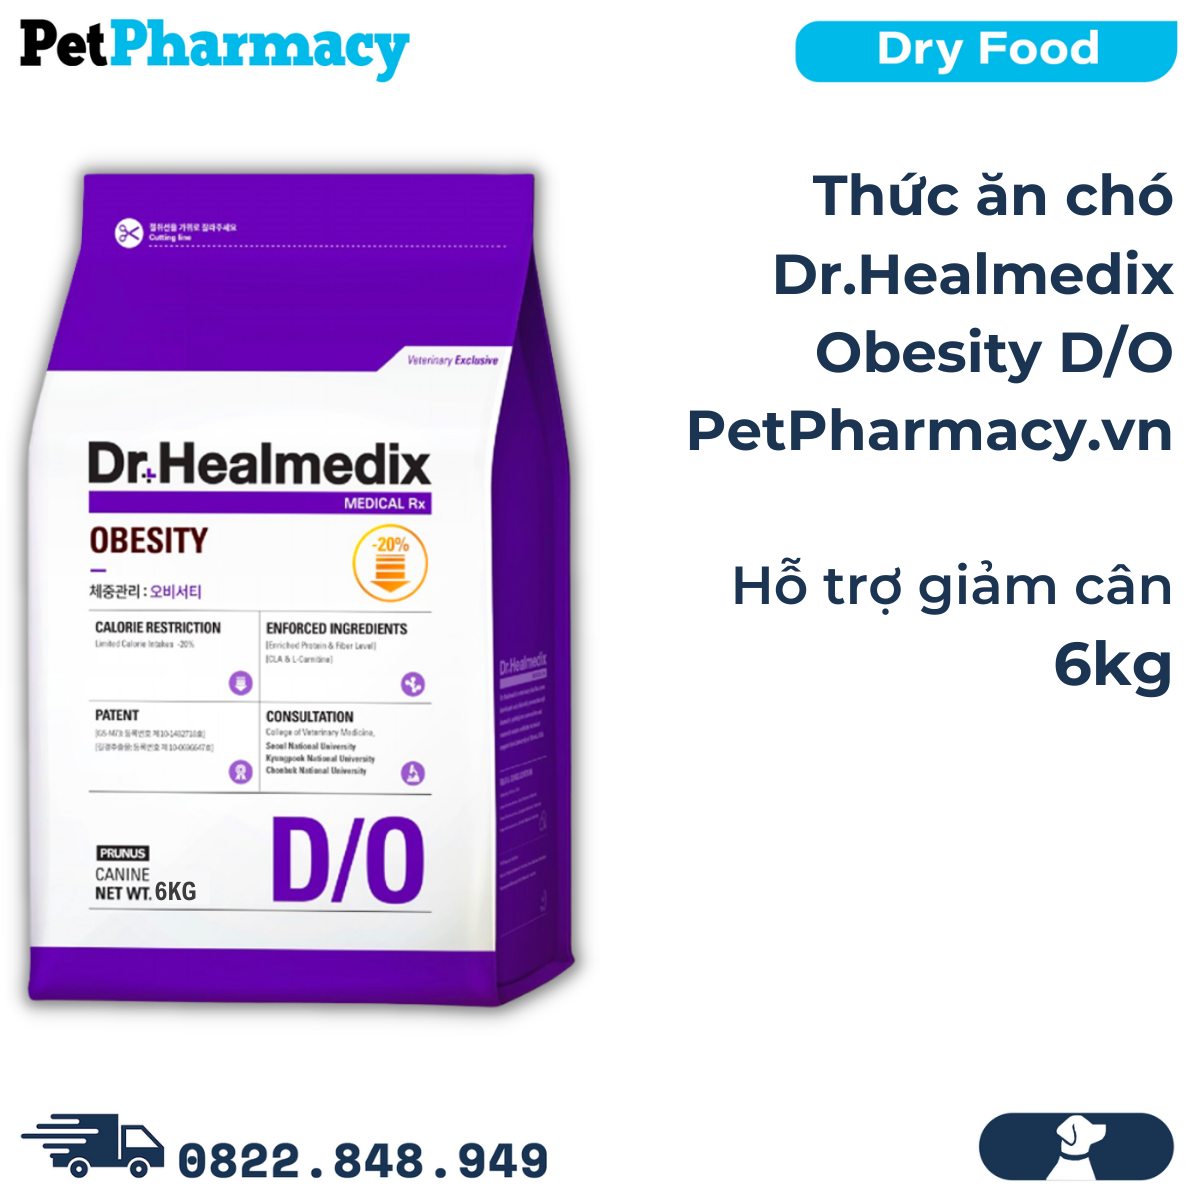  Thức ăn chó Dr.Healmedix Obesity D/O 6kg - Hỗ trợ giảm cân PetPharmacy 